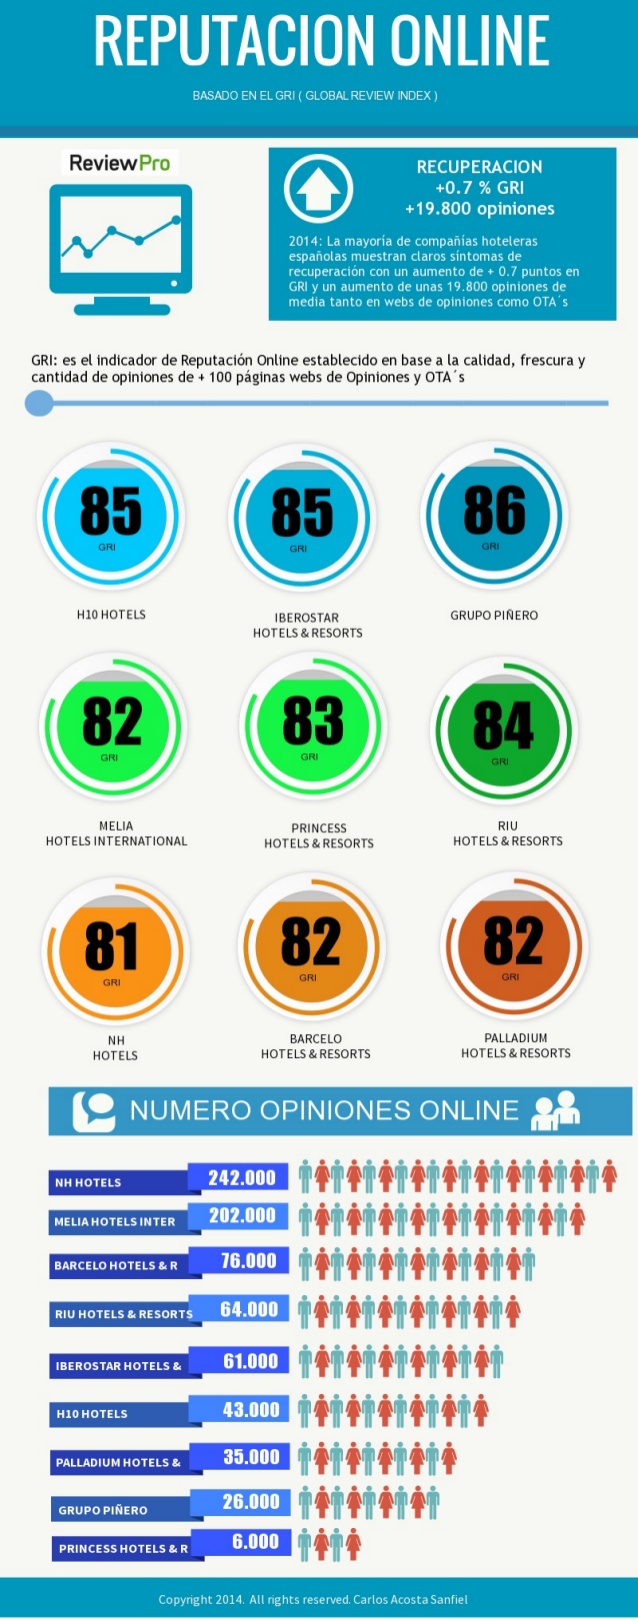 Reputacion Online ranking 2014 cadenas hoteleras españolas